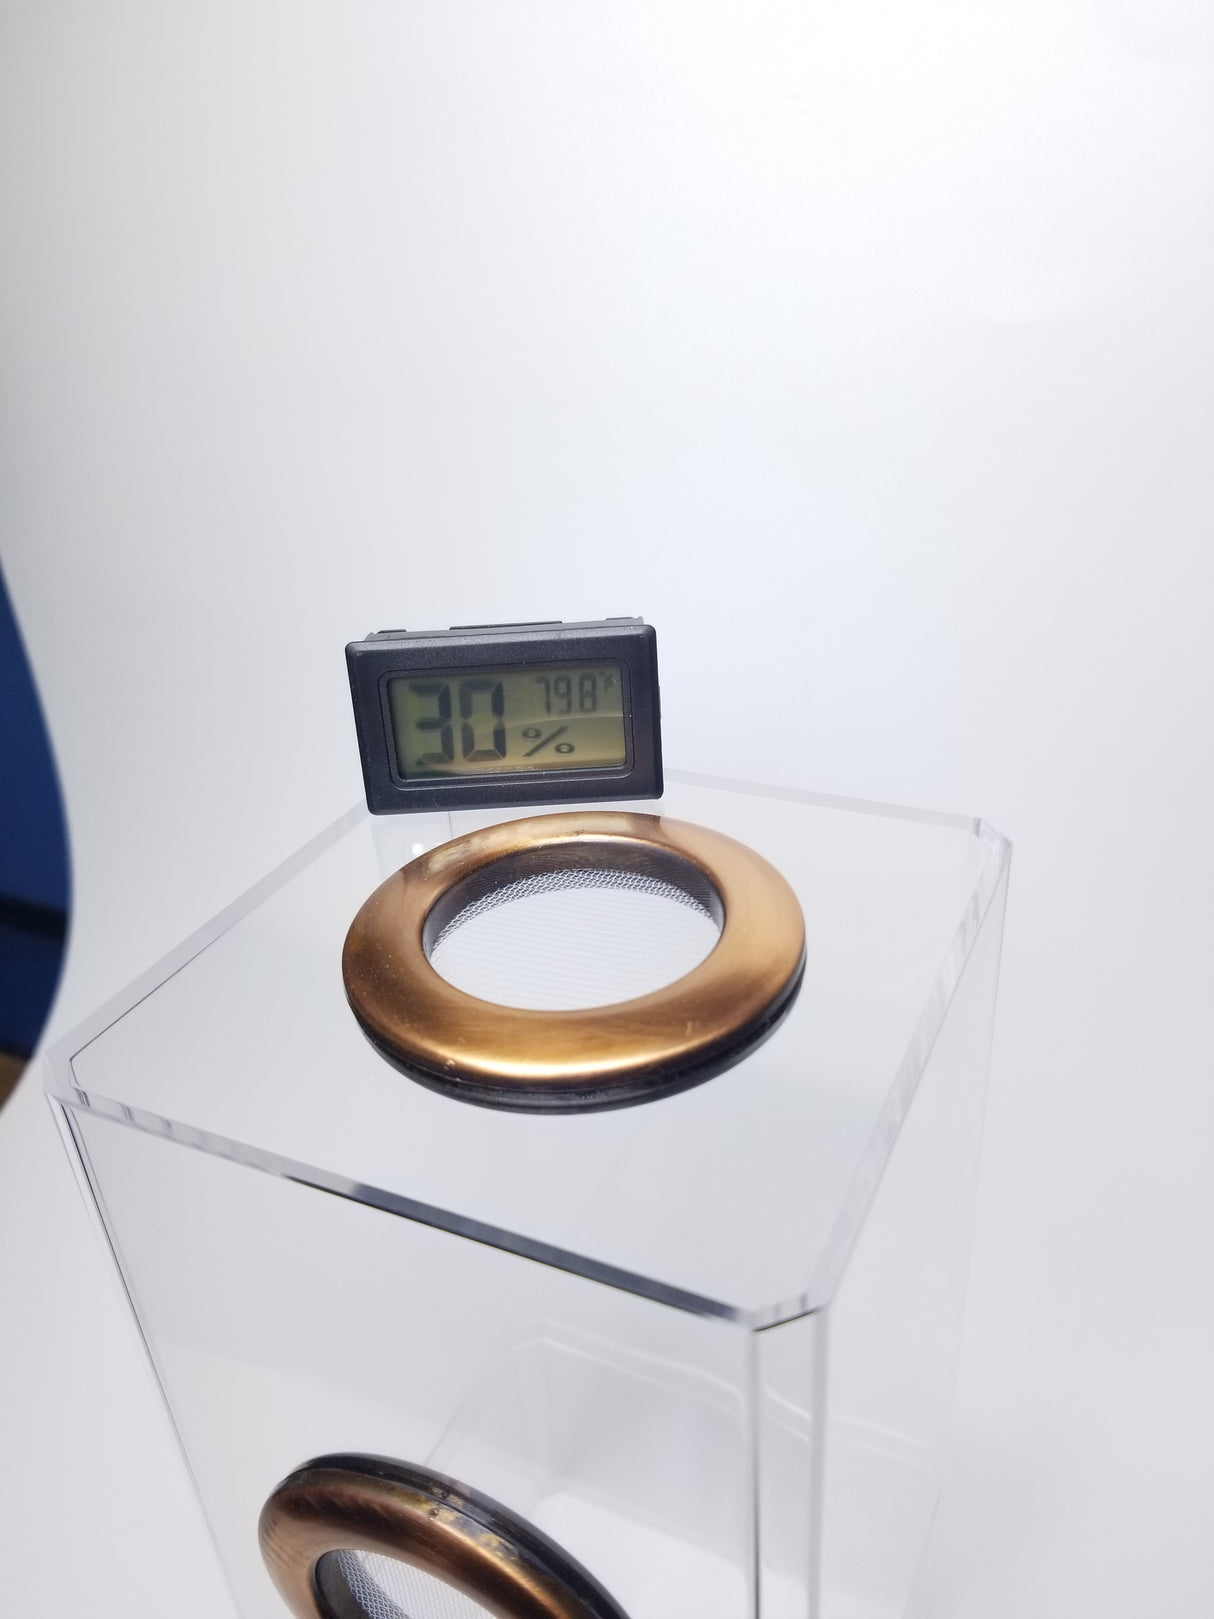 Digital Hygrometer Mini Humidity Temperature Monitor – BigFATPhids